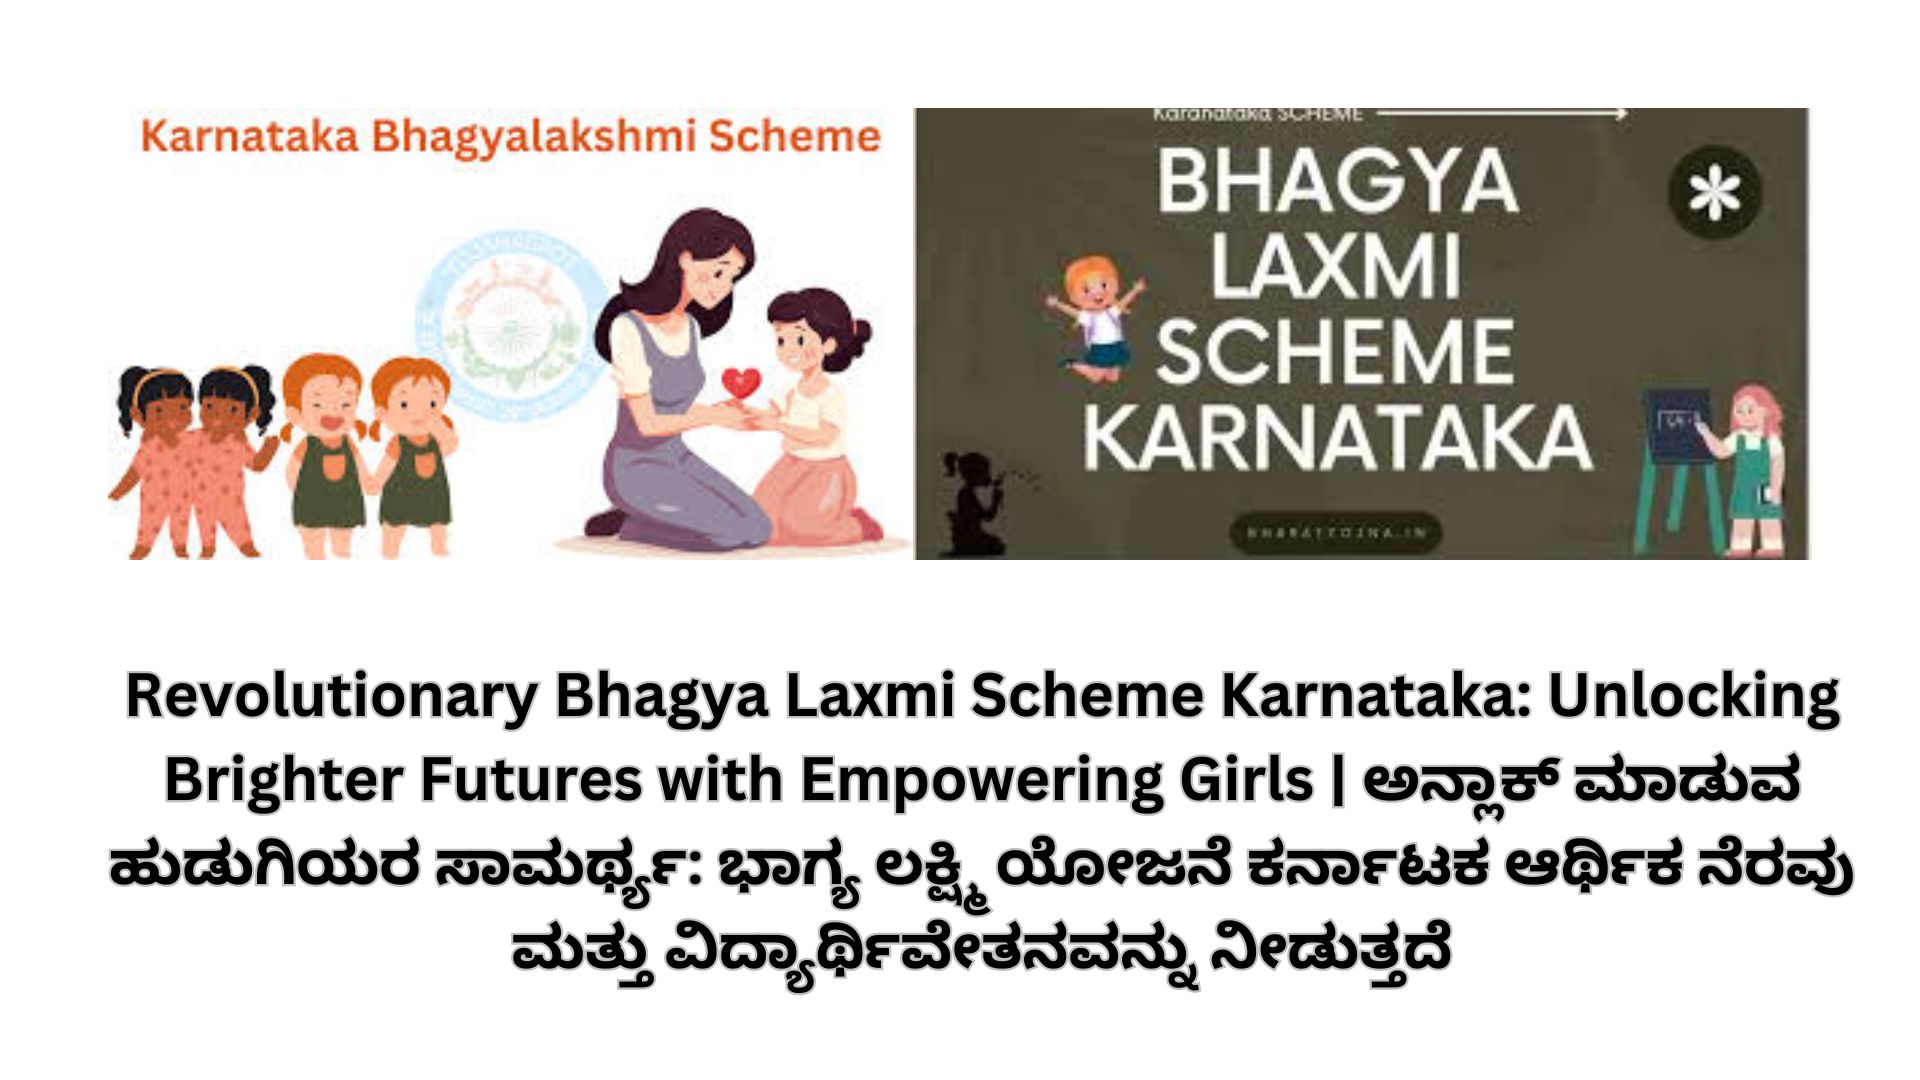 Revolutionary Bhagya Laxmi Scheme Karnataka: Unlocking Brighter Futures with Empowering Girls | ಅನ್ಲಾಕ್ ಮಾಡುವ ಹುಡುಗಿಯರ ಸಾಮರ್ಥ್ಯ: ಭಾಗ್ಯ ಲಕ್ಷ್ಮಿ ಯೋಜನೆ ಕರ್ನಾಟಕ ಆರ್ಥಿಕ ನೆರವು ಮತ್ತು ವಿದ್ಯಾರ್ಥಿವೇತನವನ್ನು ನೀಡುತ್ತದೆ